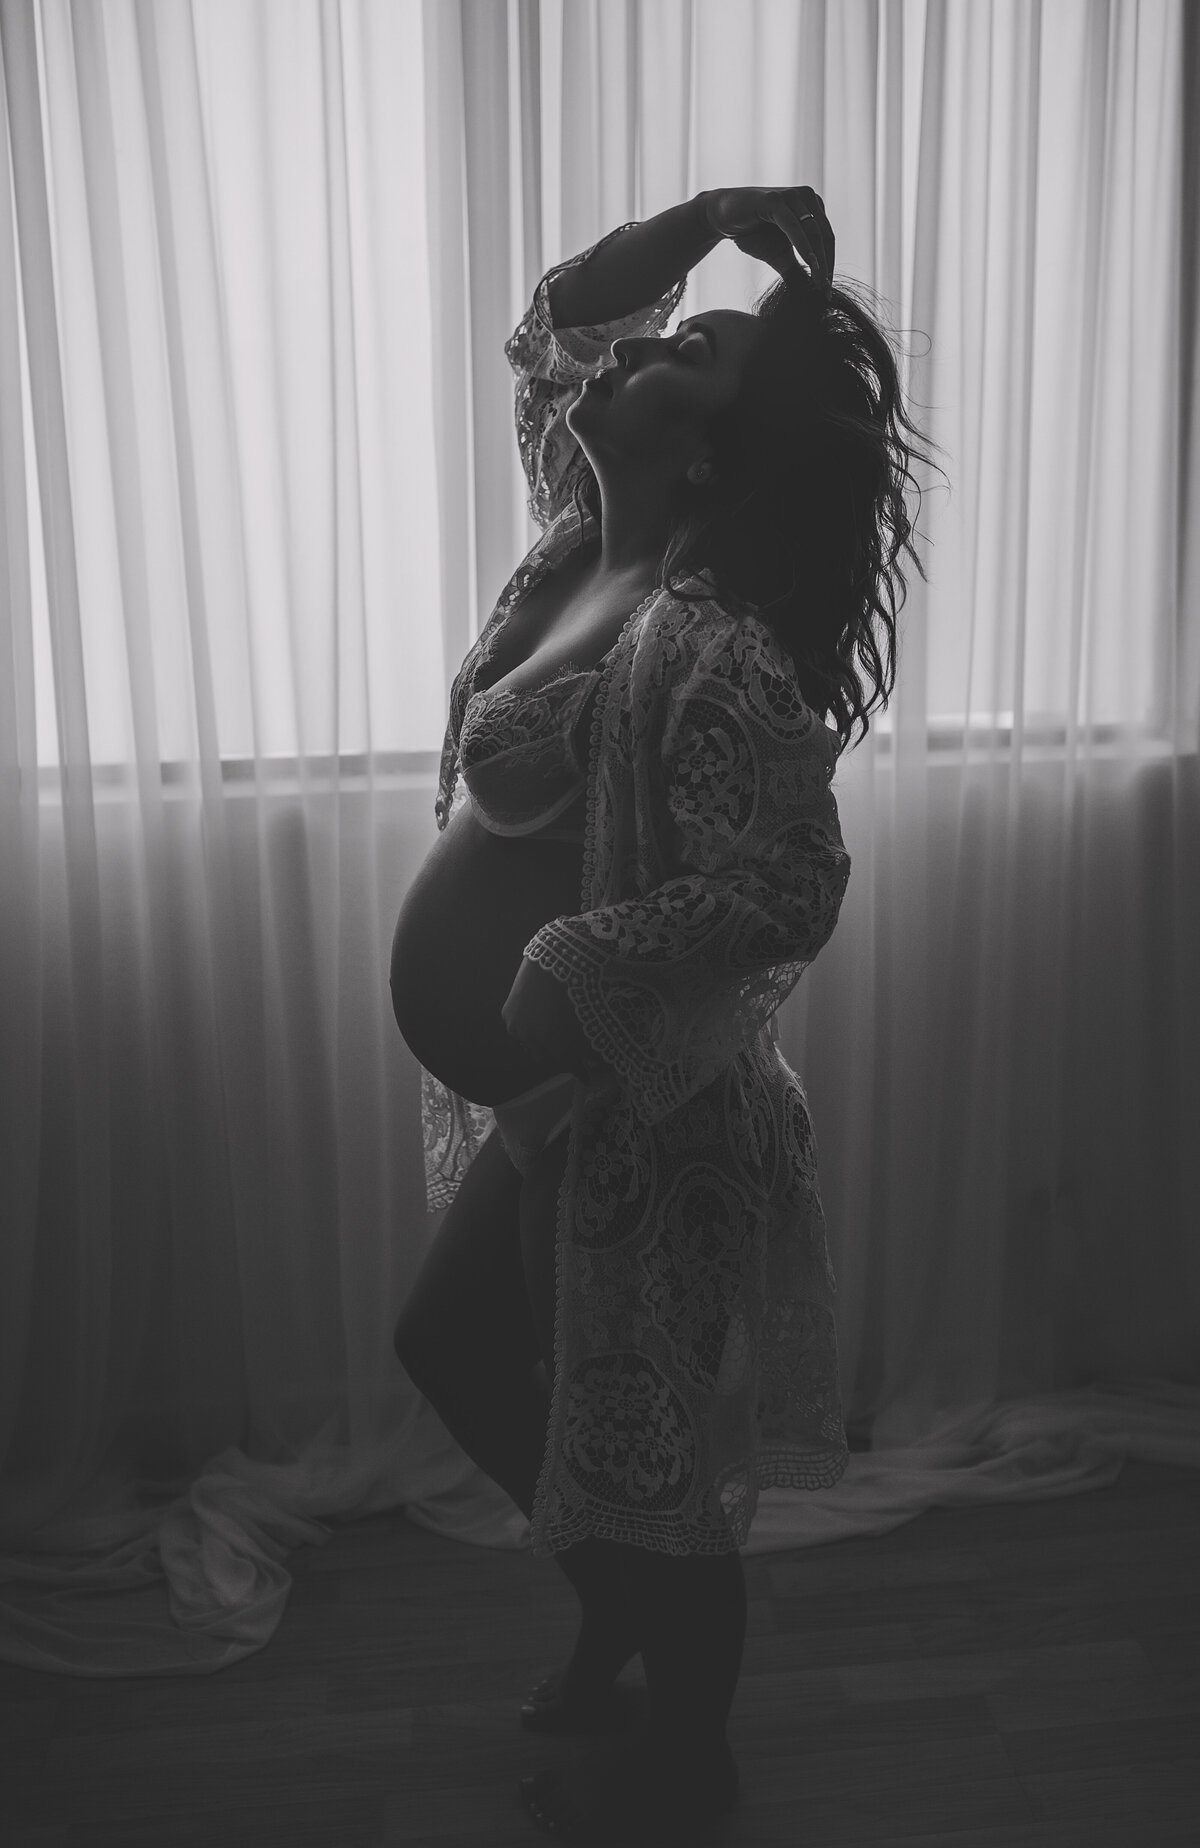 Davis maternity photography